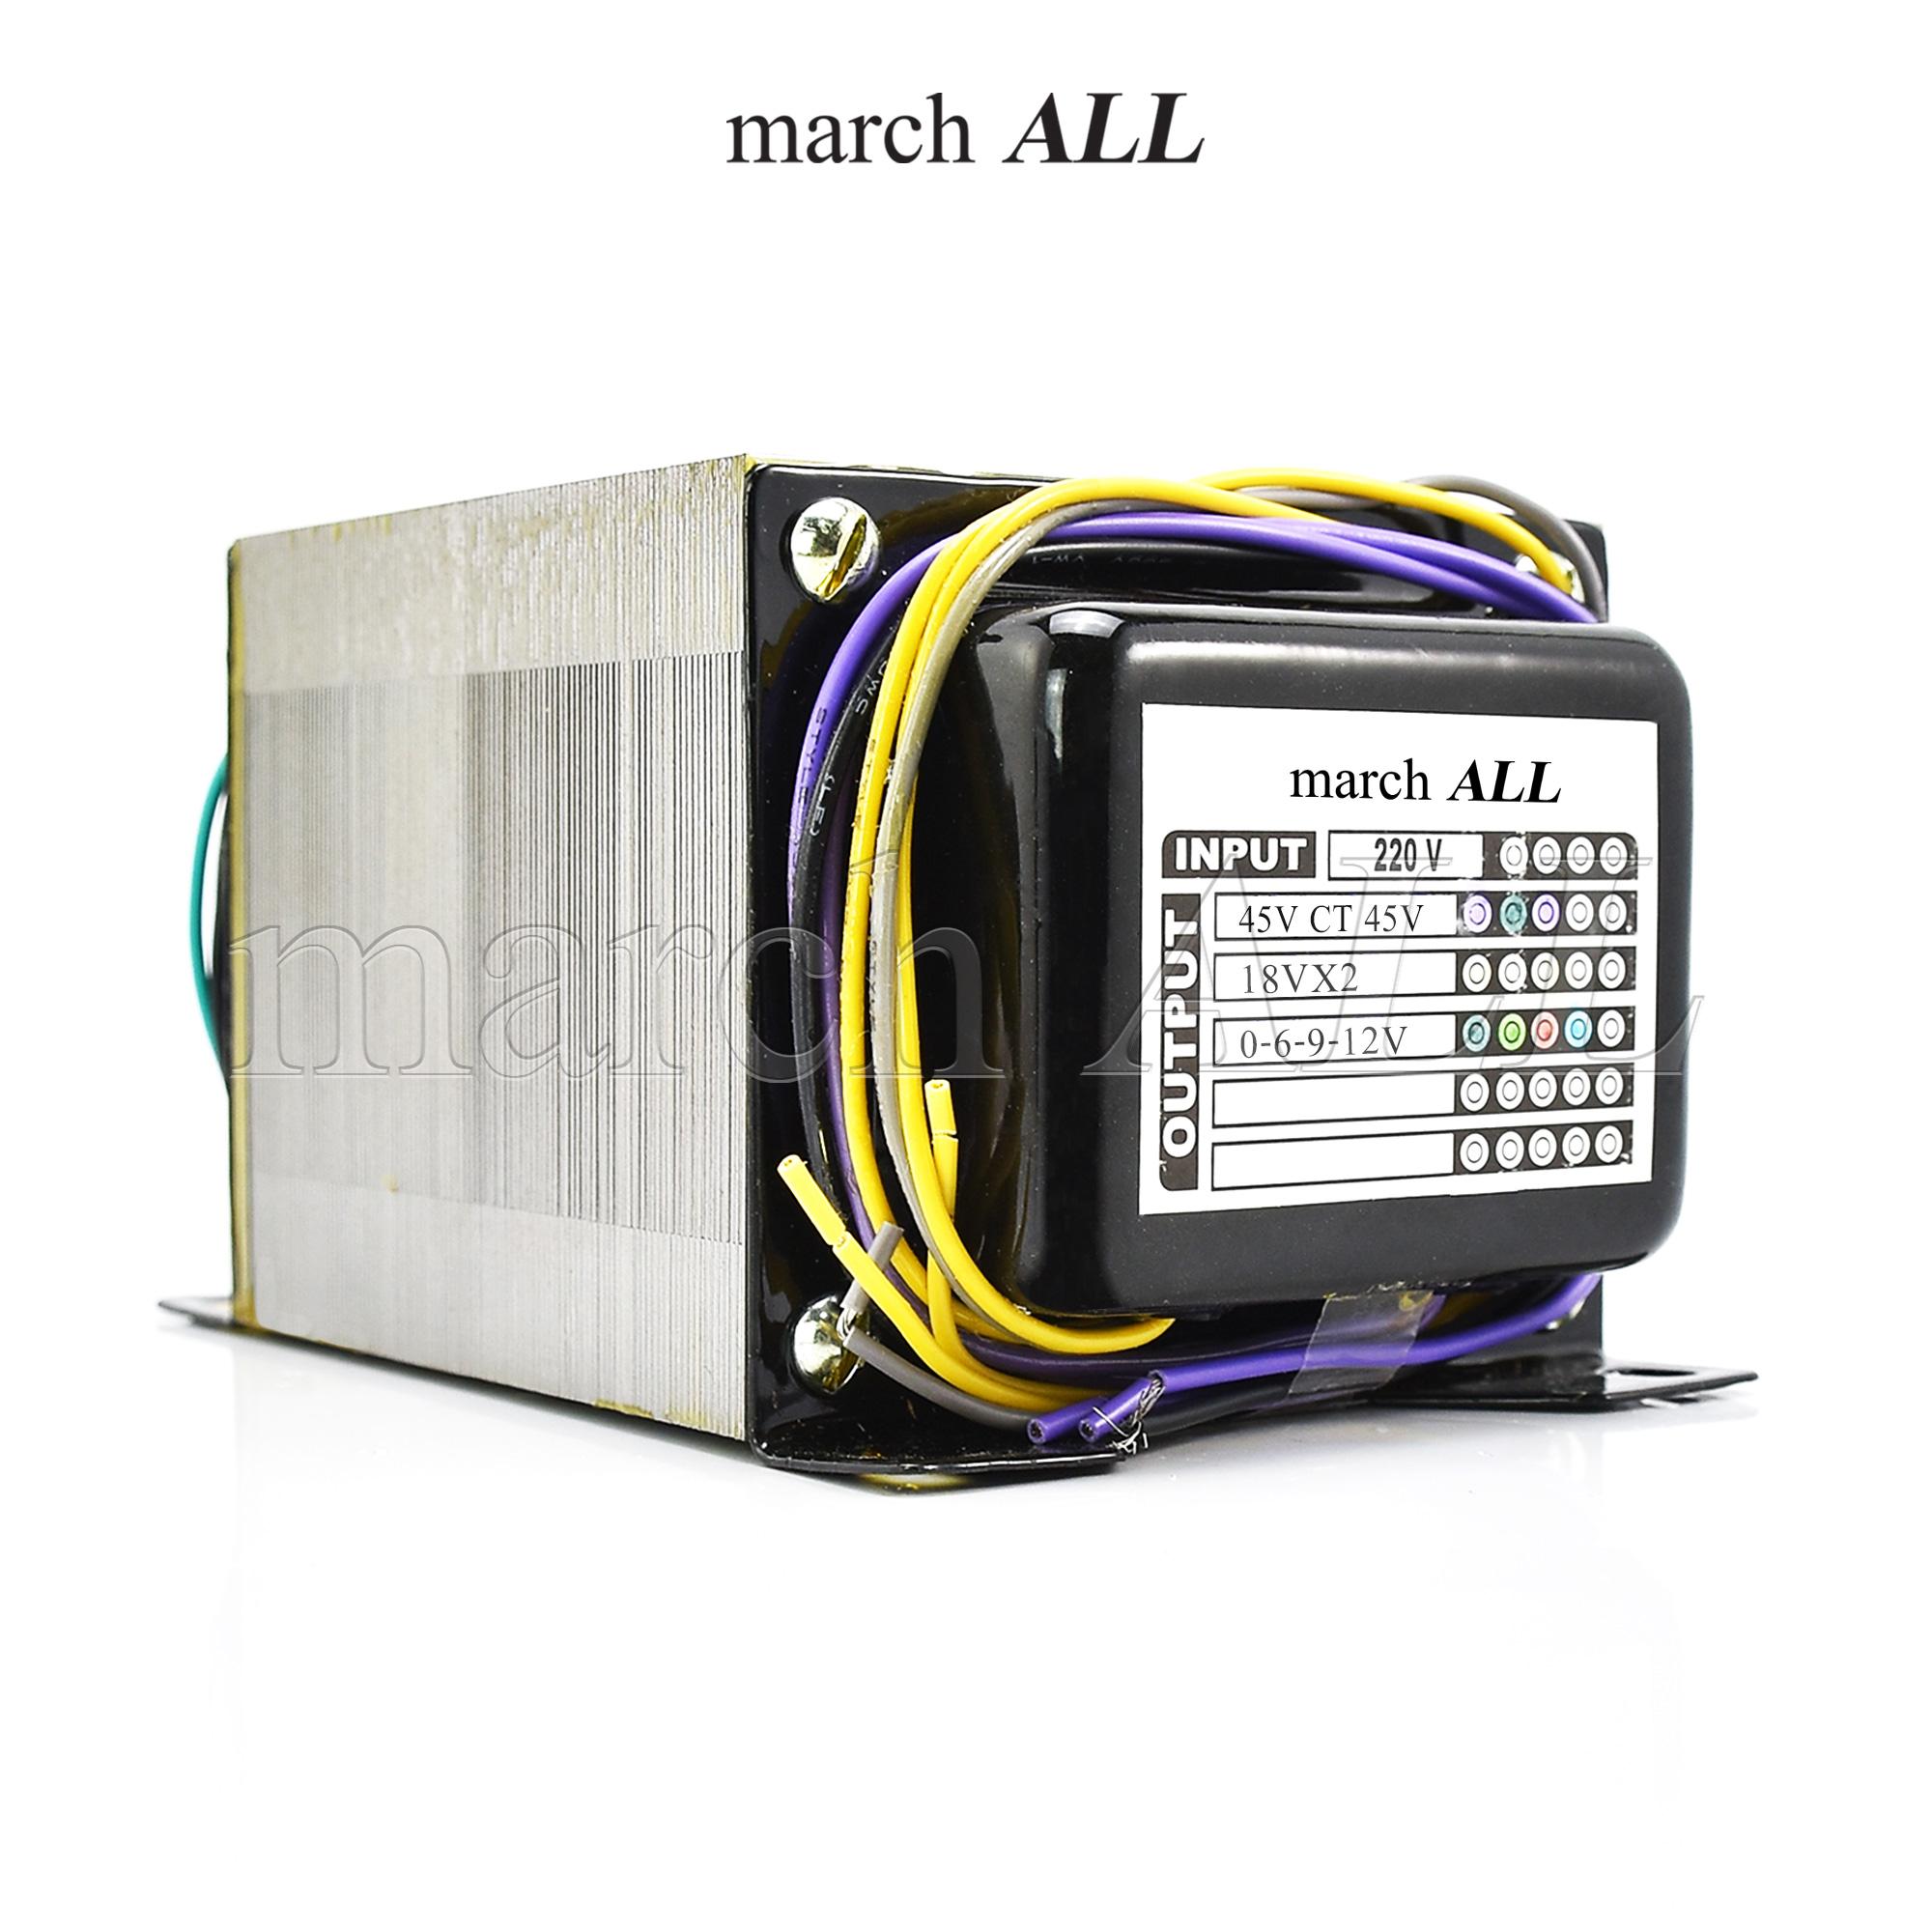 Marchall หม้อแปลงไฟฟ้า AC ขนาด 220W วัตต์แท้ แรงดัน AC เอาพุต 45V-0-45V และ 18V-0-18V จ่ายกระแสได้ 6 ถึง12A พร้อมขด 0-6V-9V-12V ชนิด EI TRANSFORMER Center Tap CT ไฟคู่ 3 สายไฟ นำไปต่อ เรคติไฟเออร์ หรือ ต่อตรงได้ เป็นภาคจ่ายไฟได้ทุกวงจร เครื่องเสียง